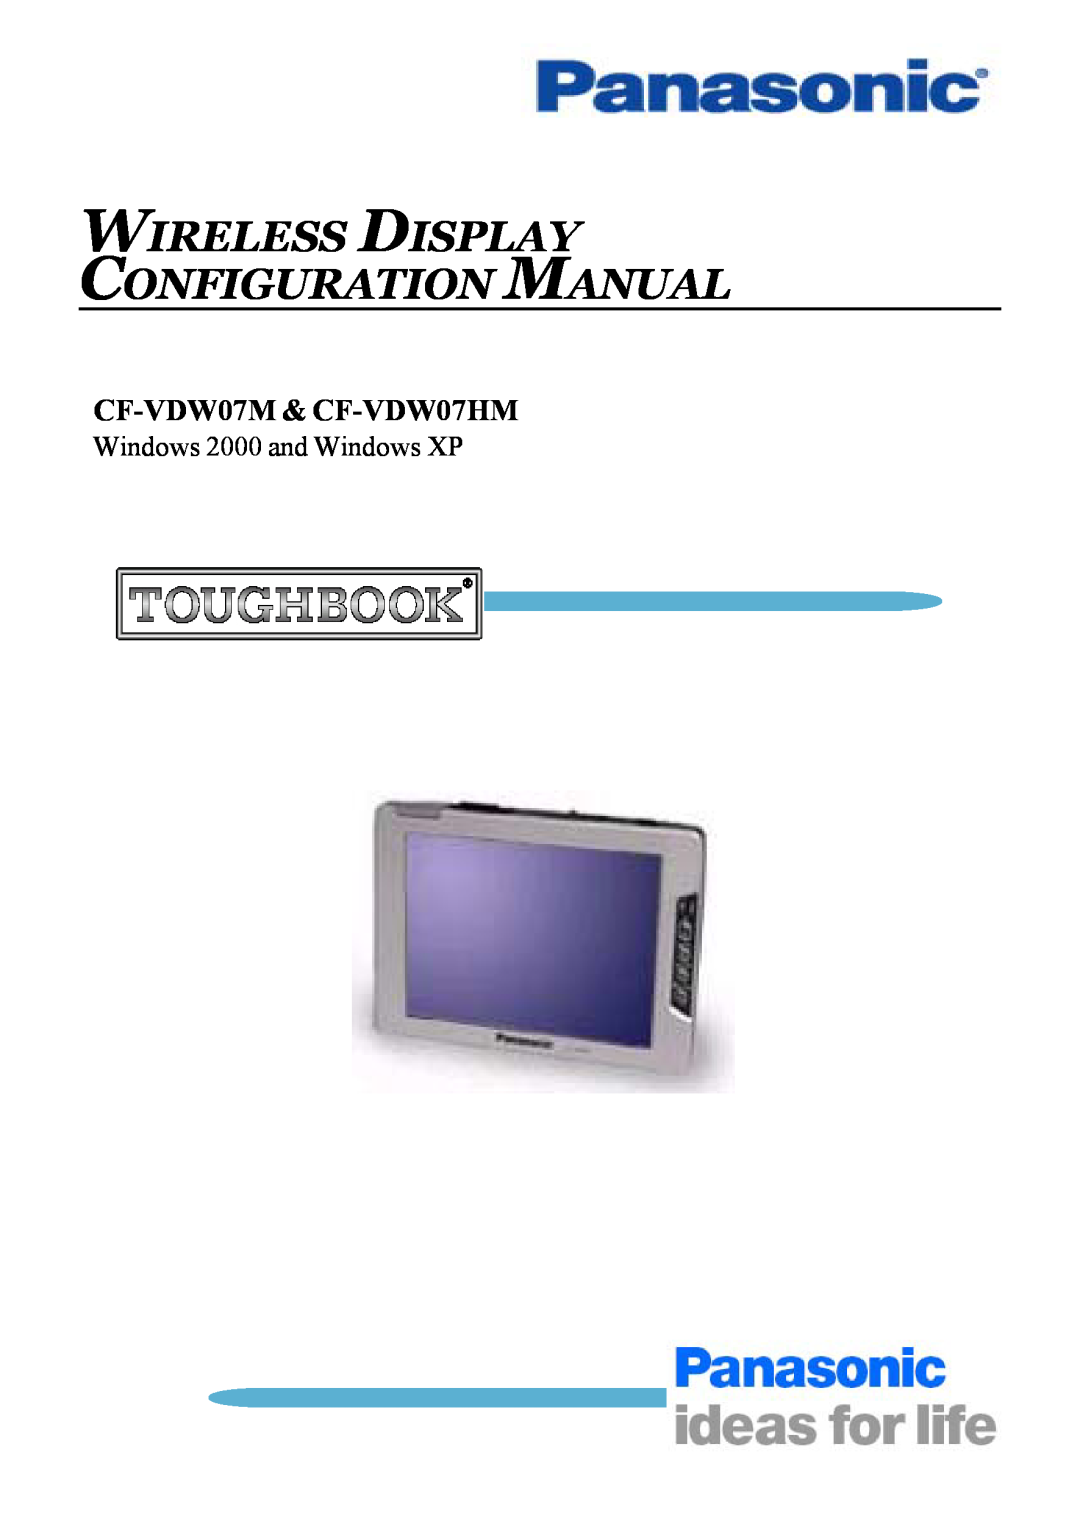 Panasonic configurationmanual CF-VDW07M & CF-VDW07HM, Wireless Display Configuration Manual 